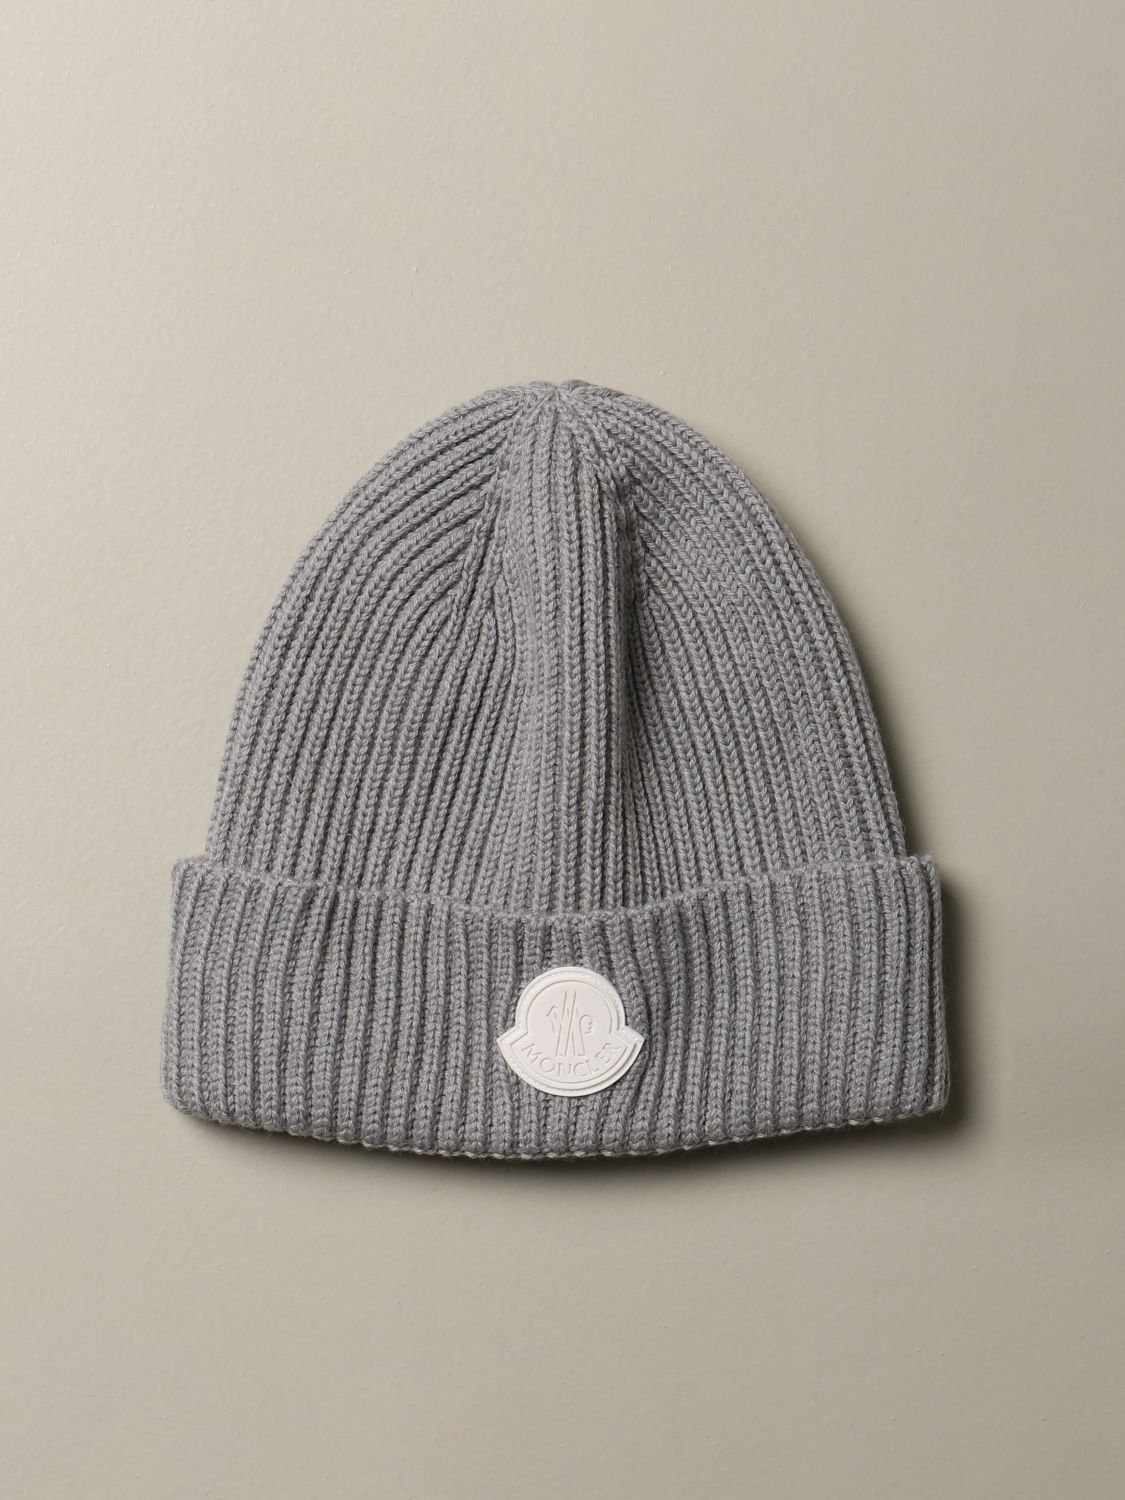 moncler hat grey